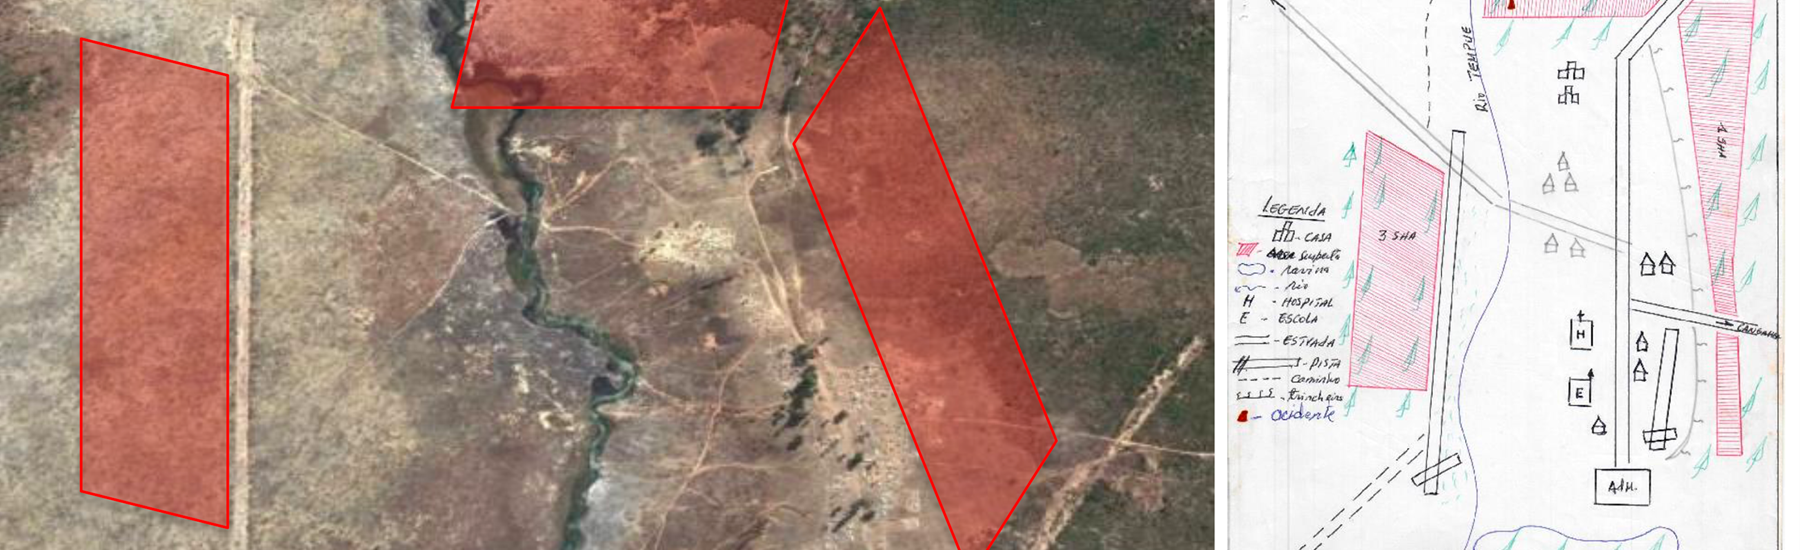 Tempue_Angola_minefield_maps